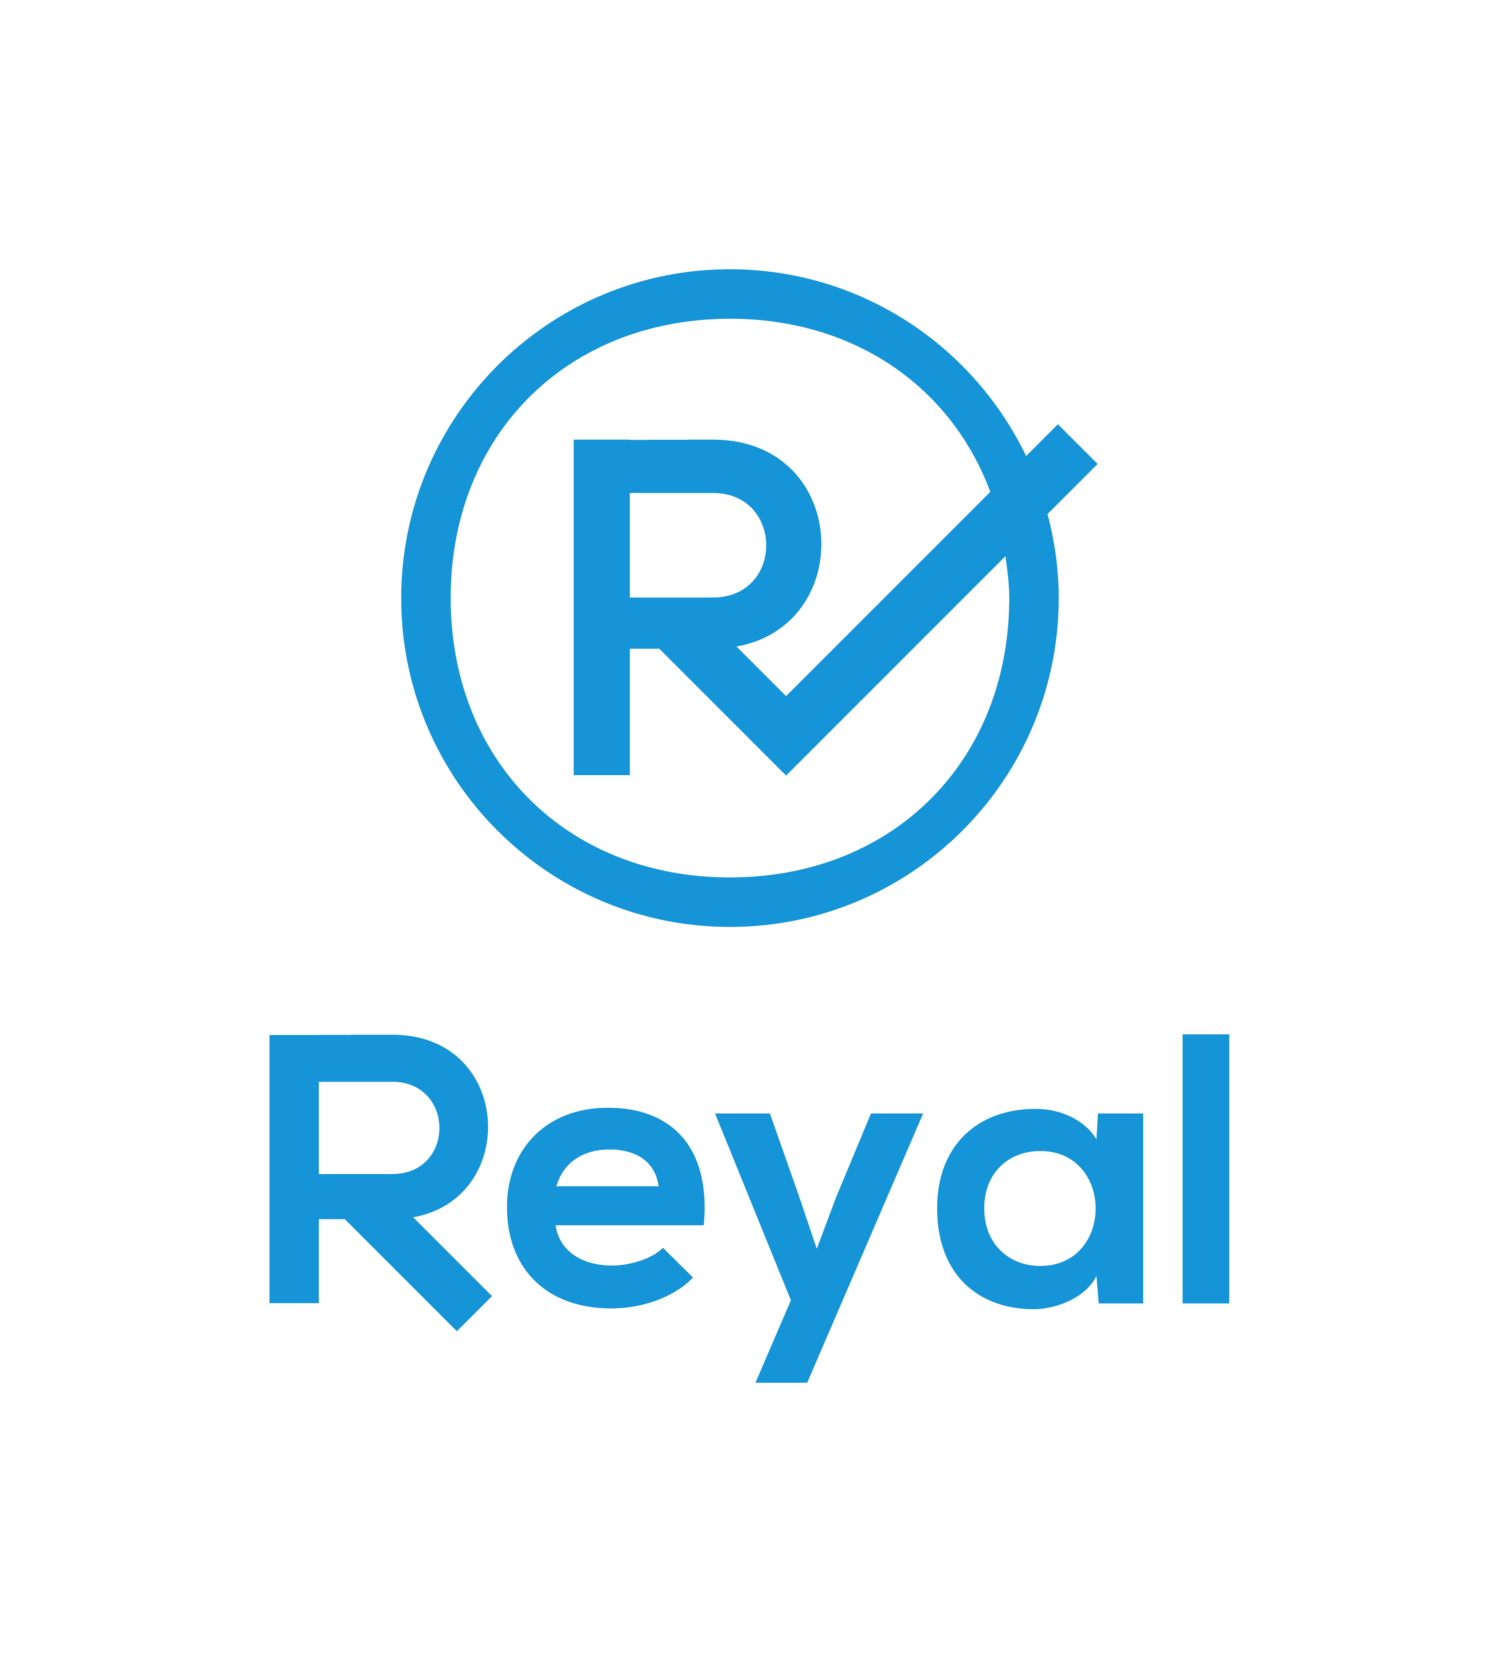 The Reyal Company